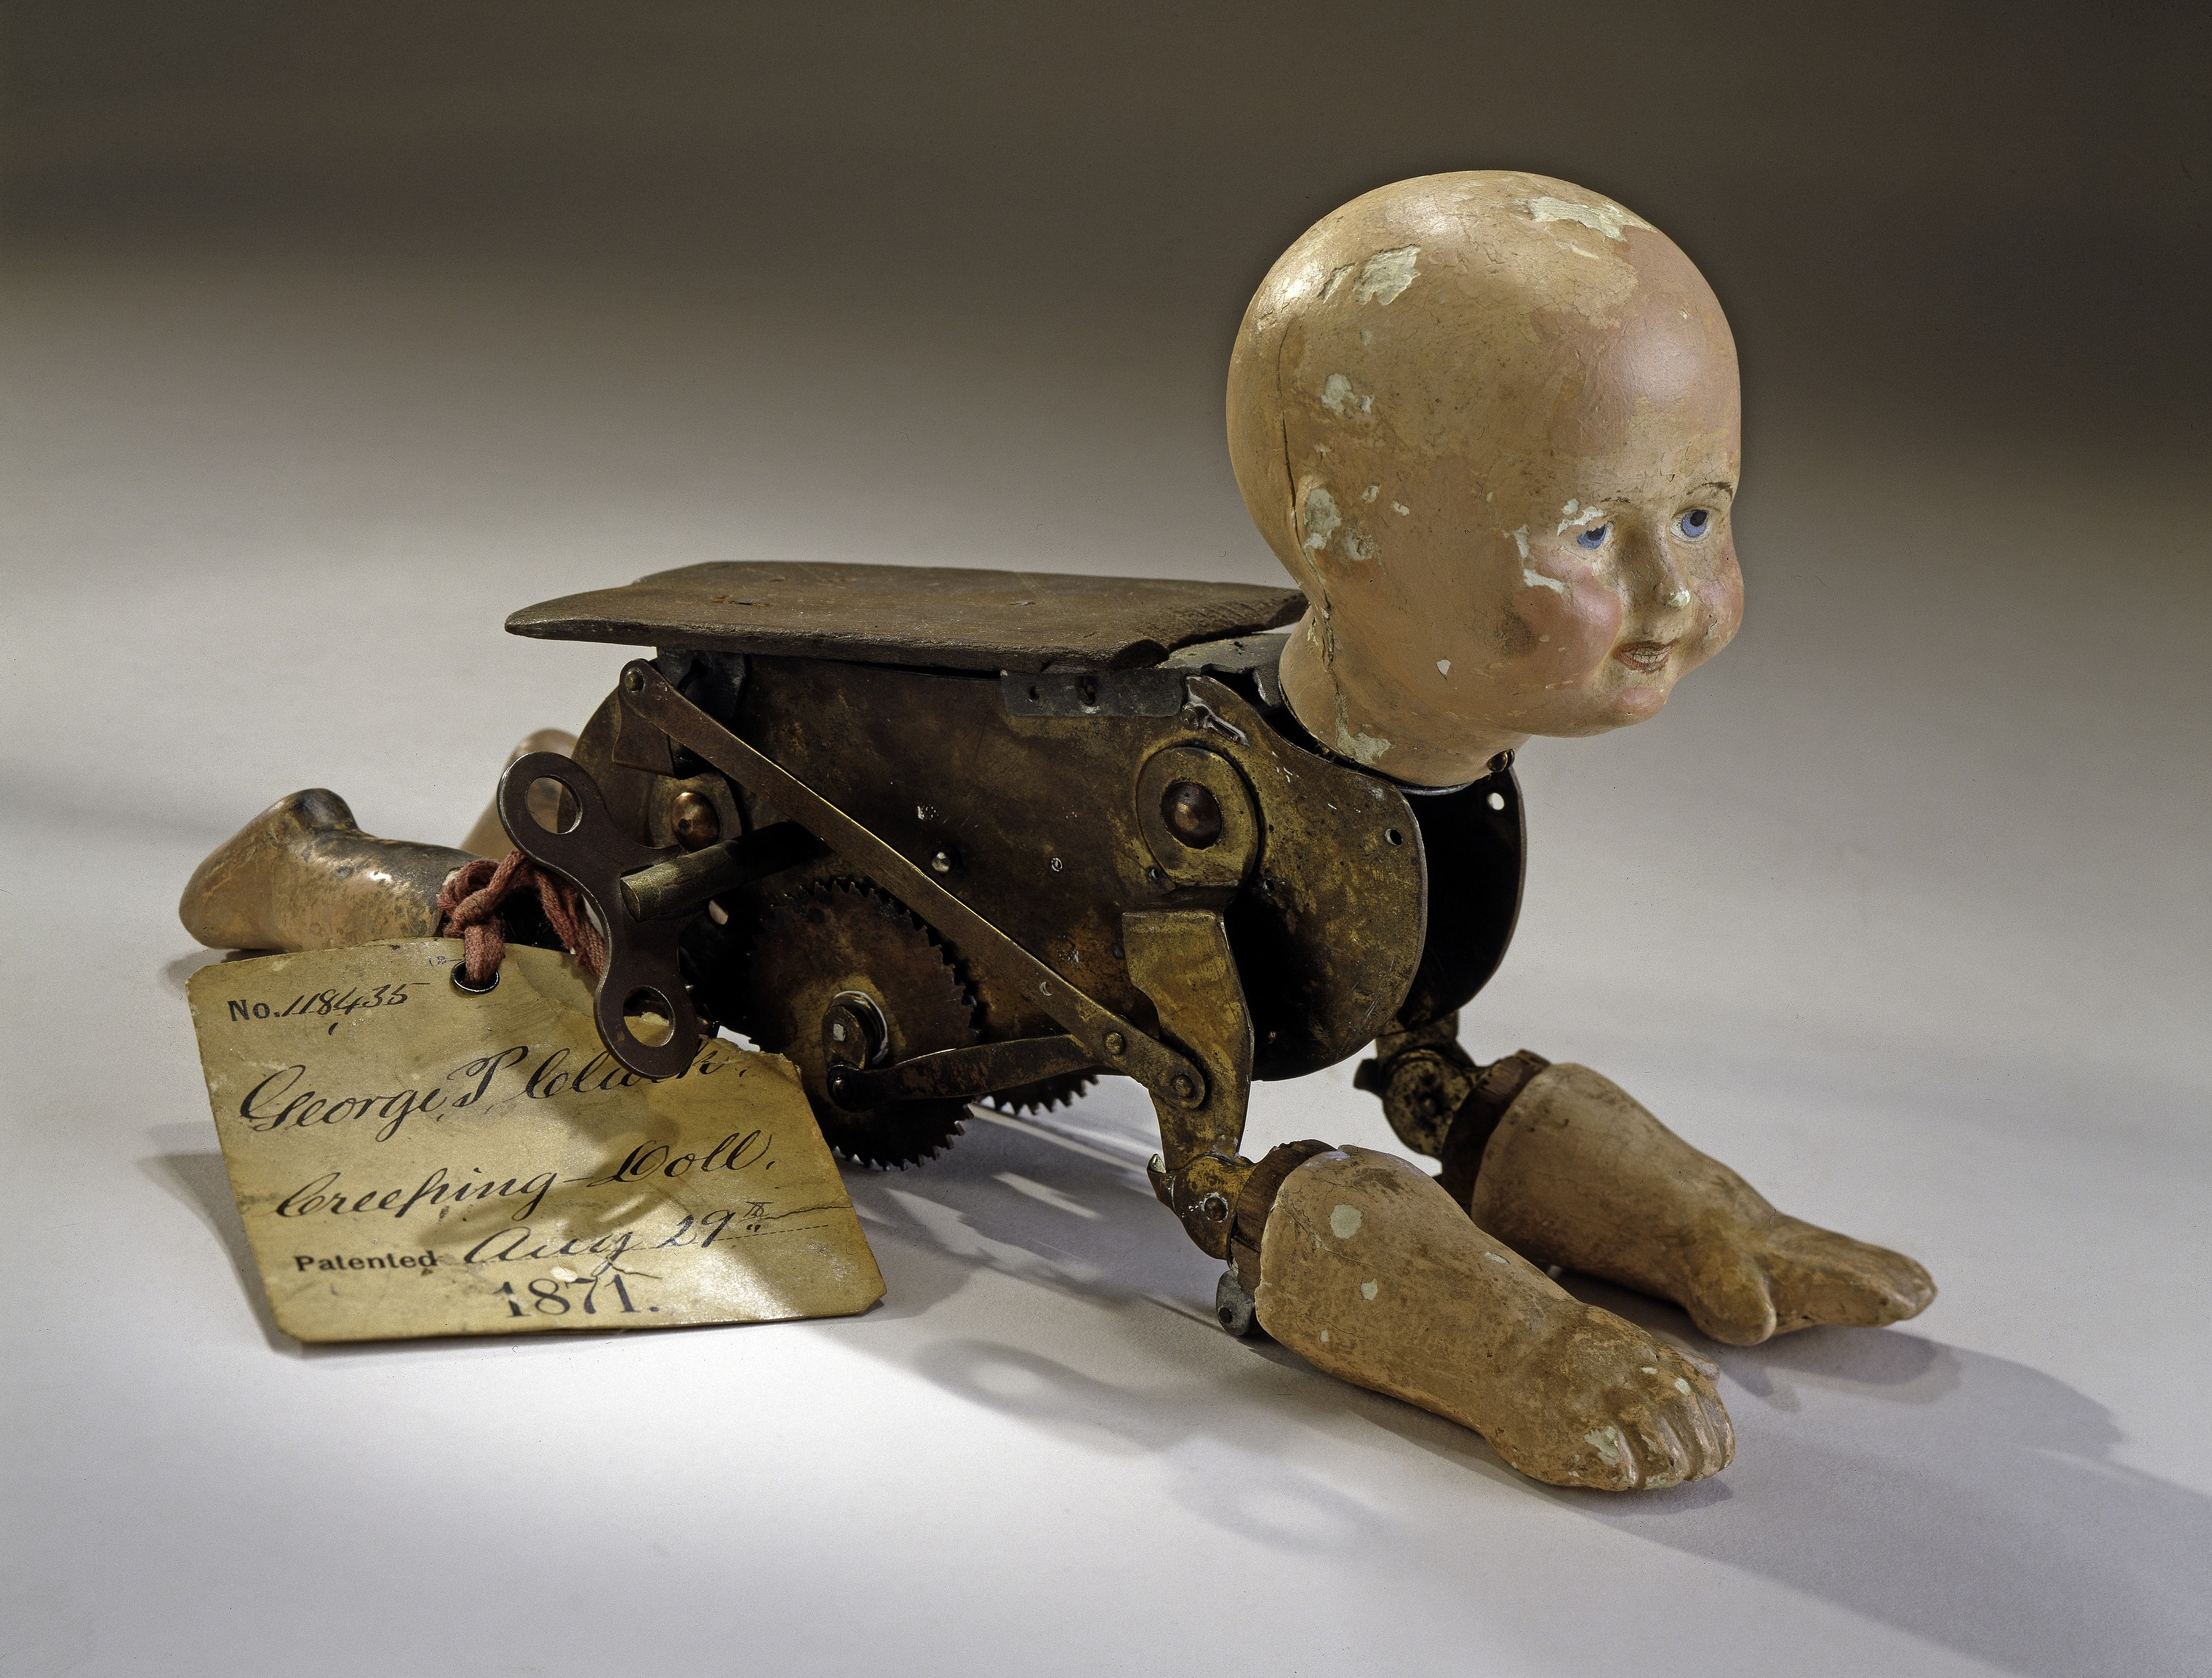 Une poupée rampante en 1871